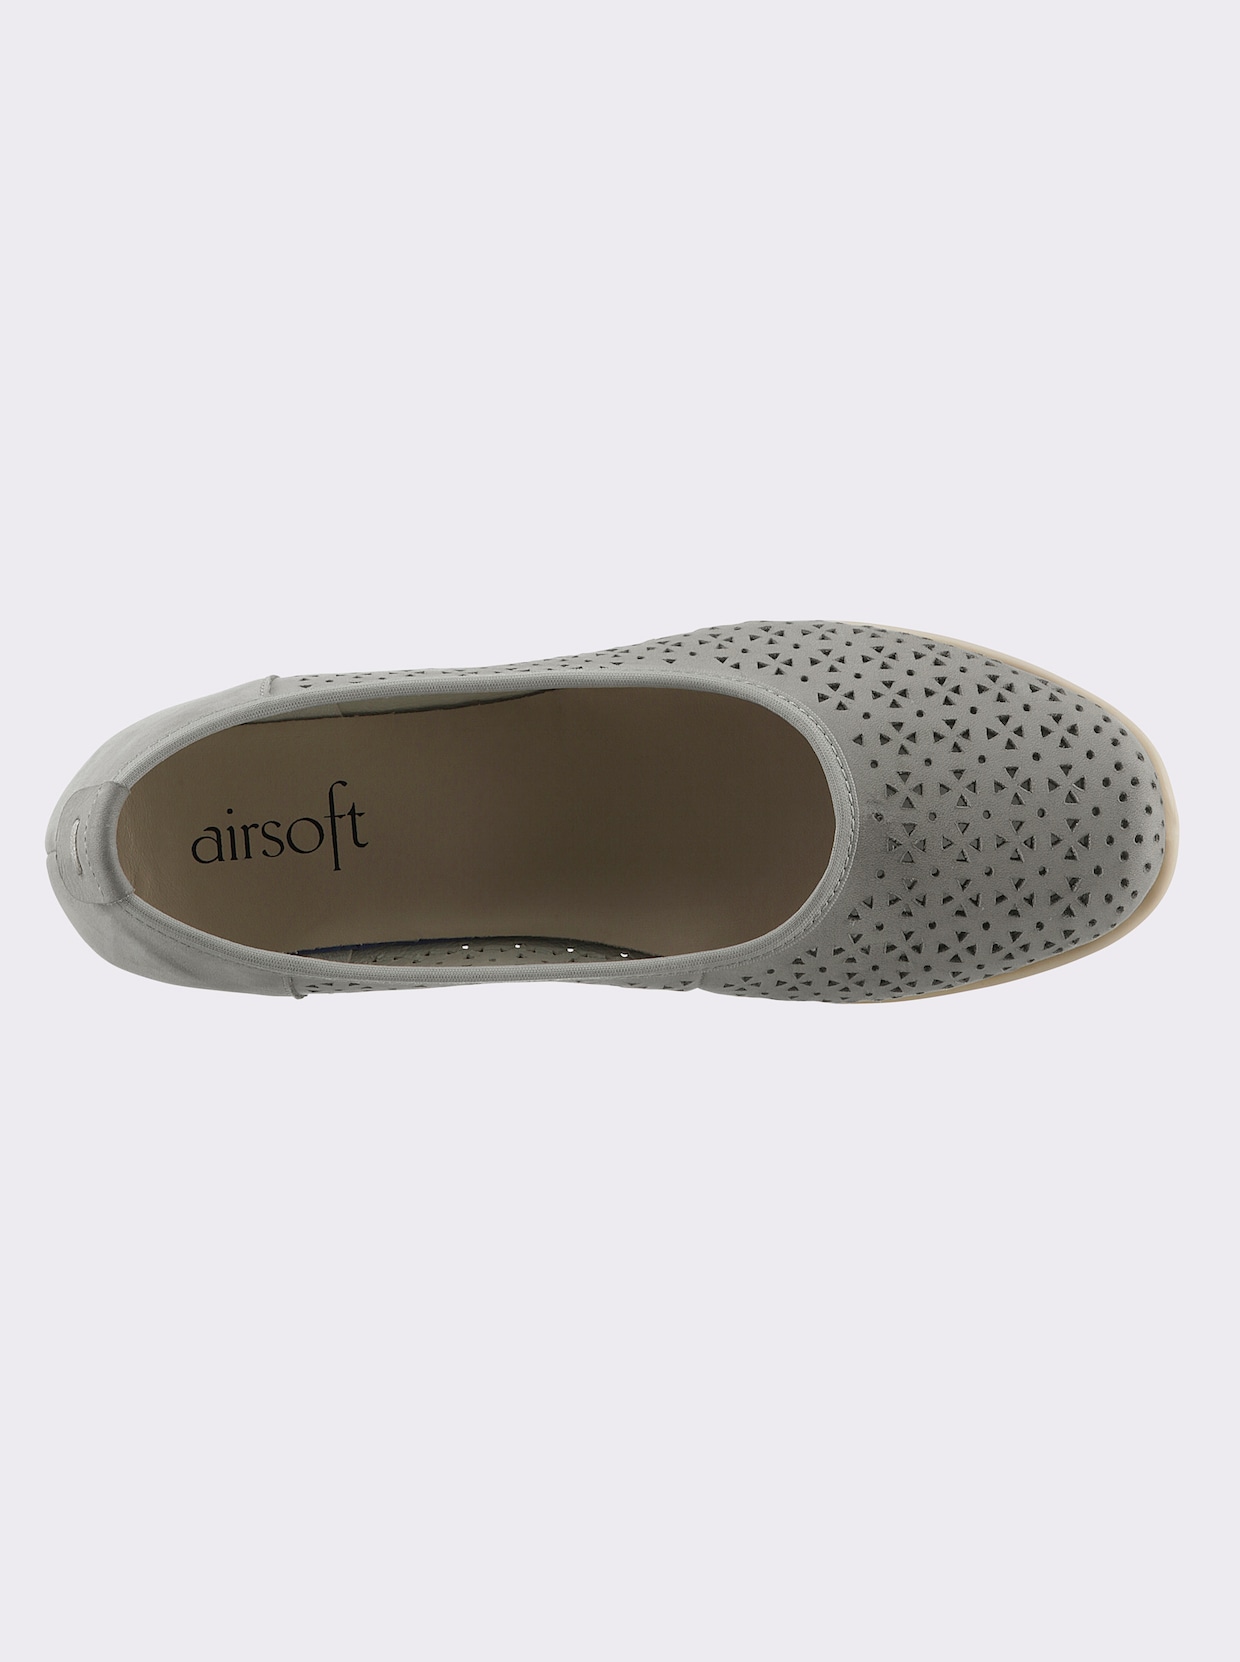 airsoft comfort+ Ballerines - gris pierre